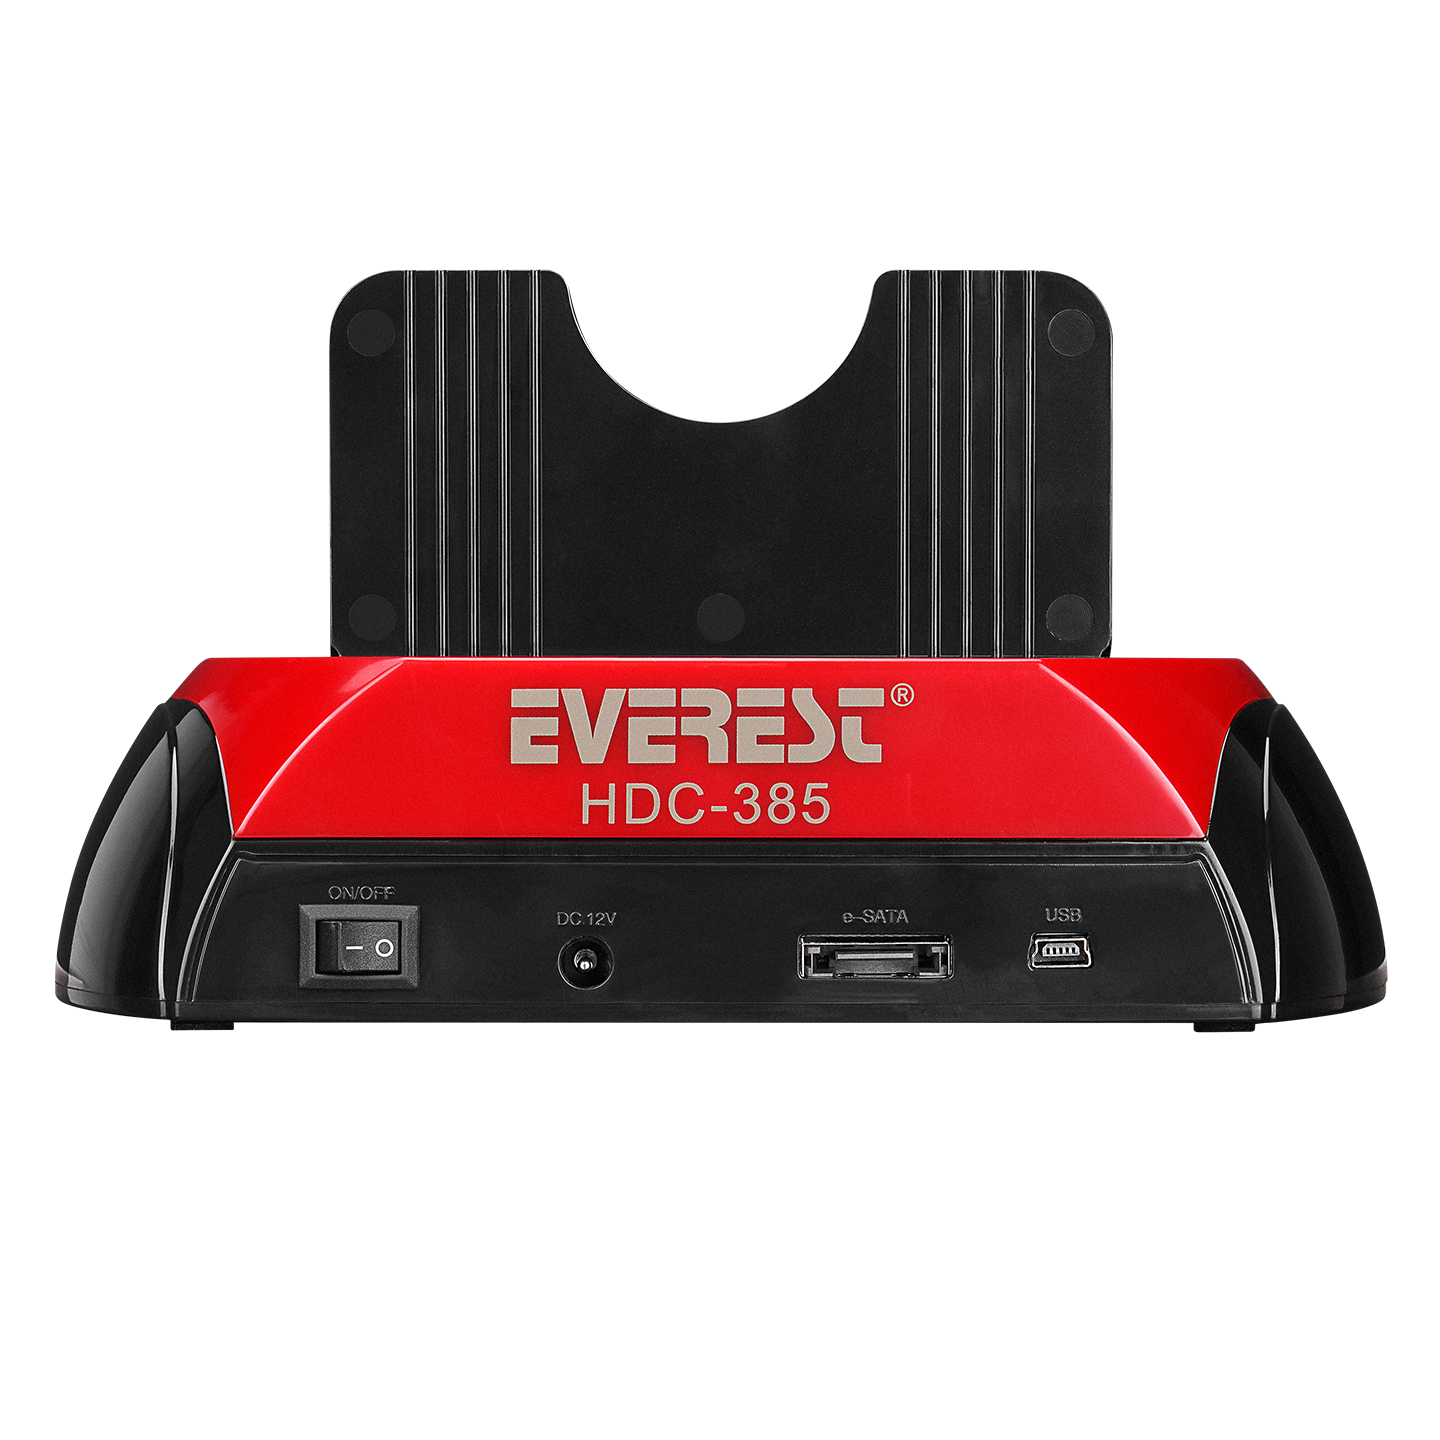 Everest HDC-385 Harici Usb 2.0 2.5"- 3.5" IDE+SATA Hdd + Kart Okuyucu Docking